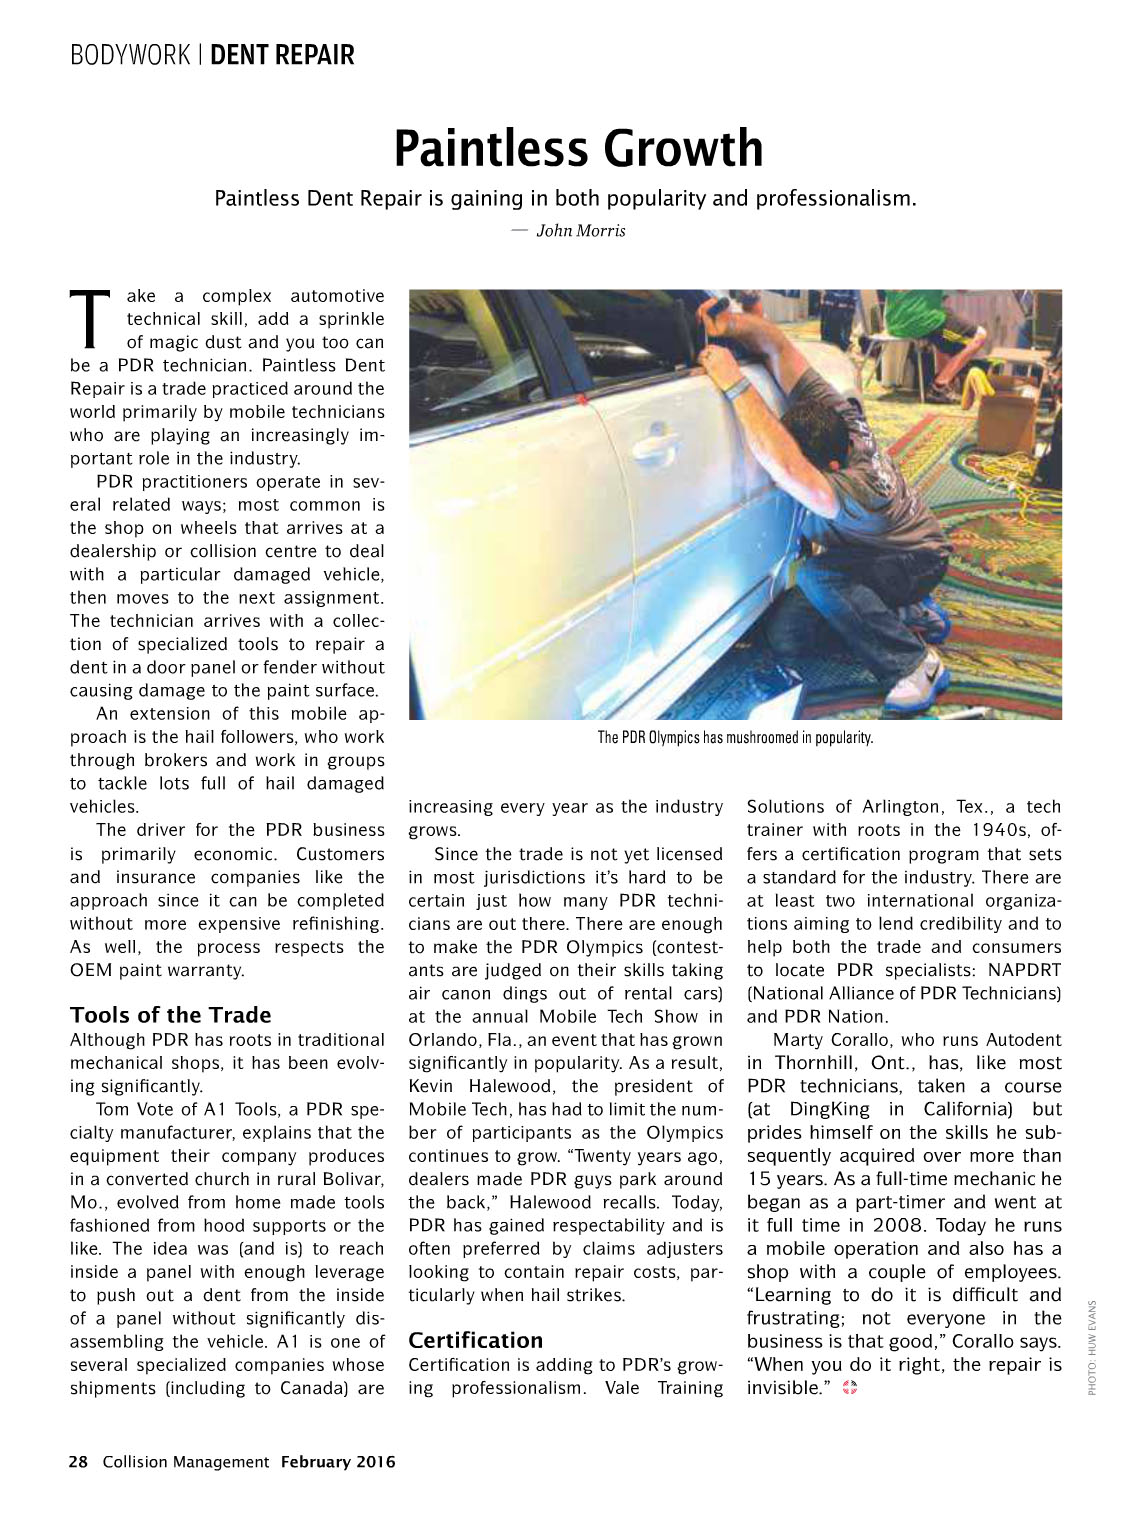 collision magazine article paintless dent repair